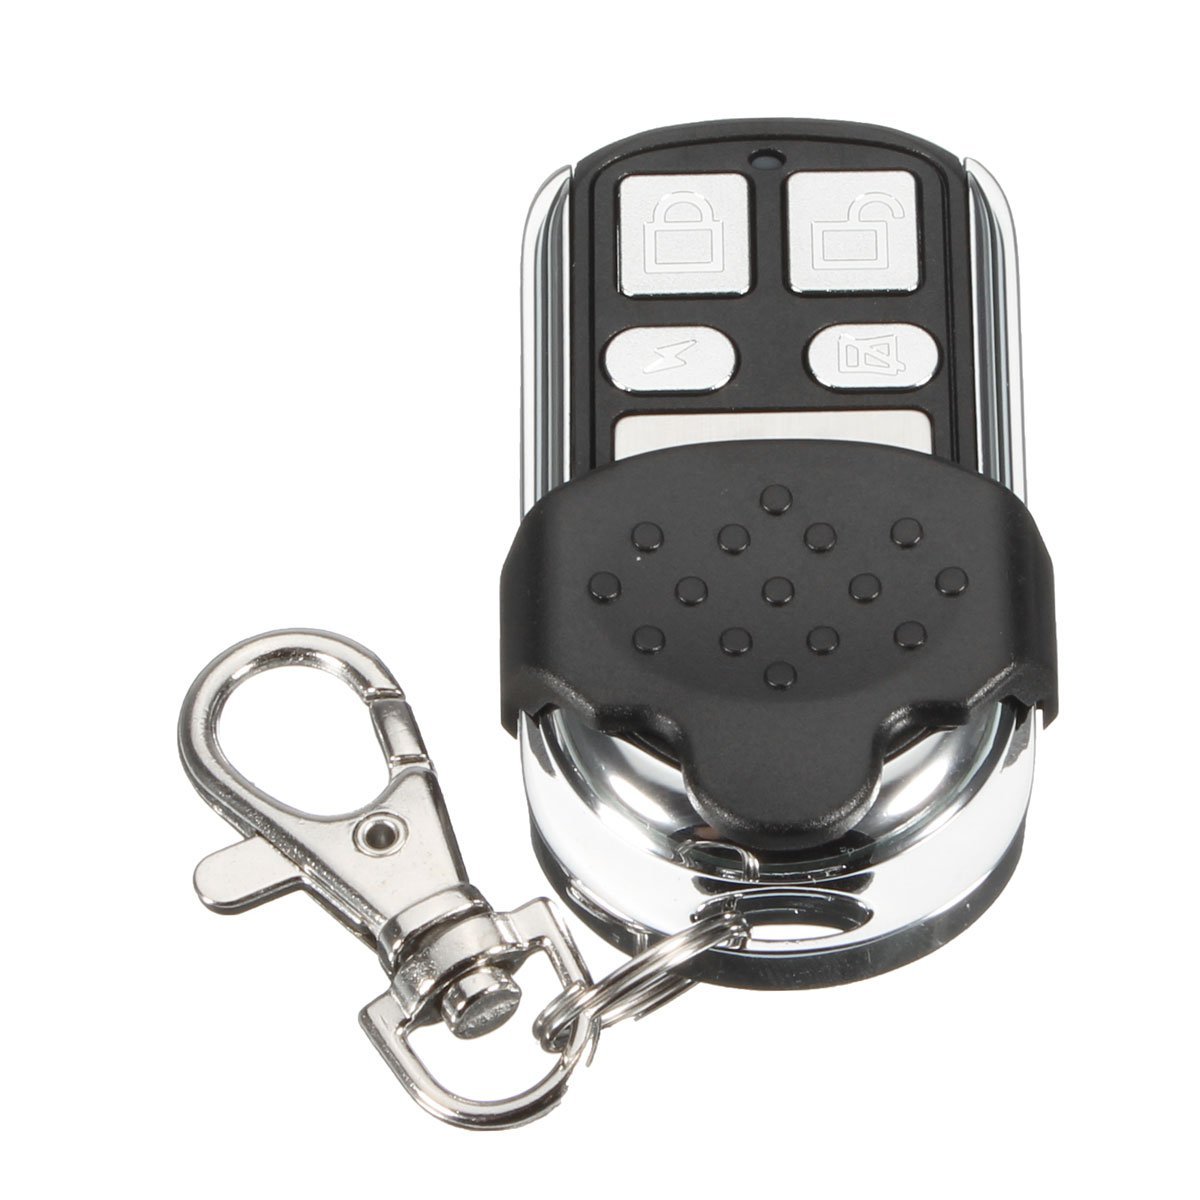 4 Button 318MHz Plastic Garage Gate Key Remote Control / Entry Remote